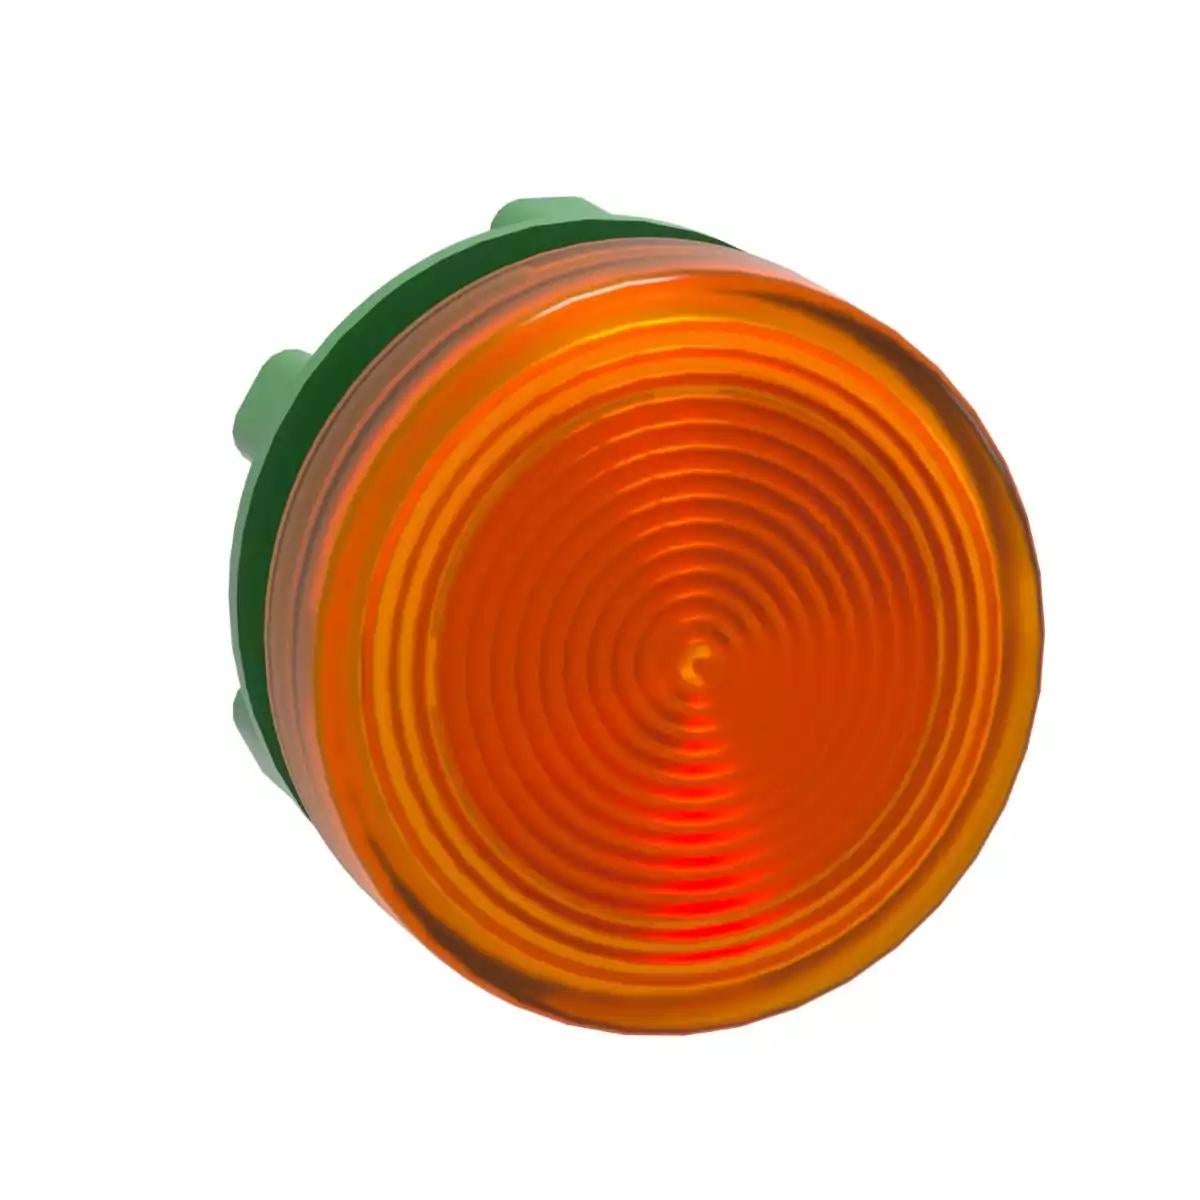 Head for pilot light, Harmony XB5, orange, 22mm, with grooved lens, universal LED